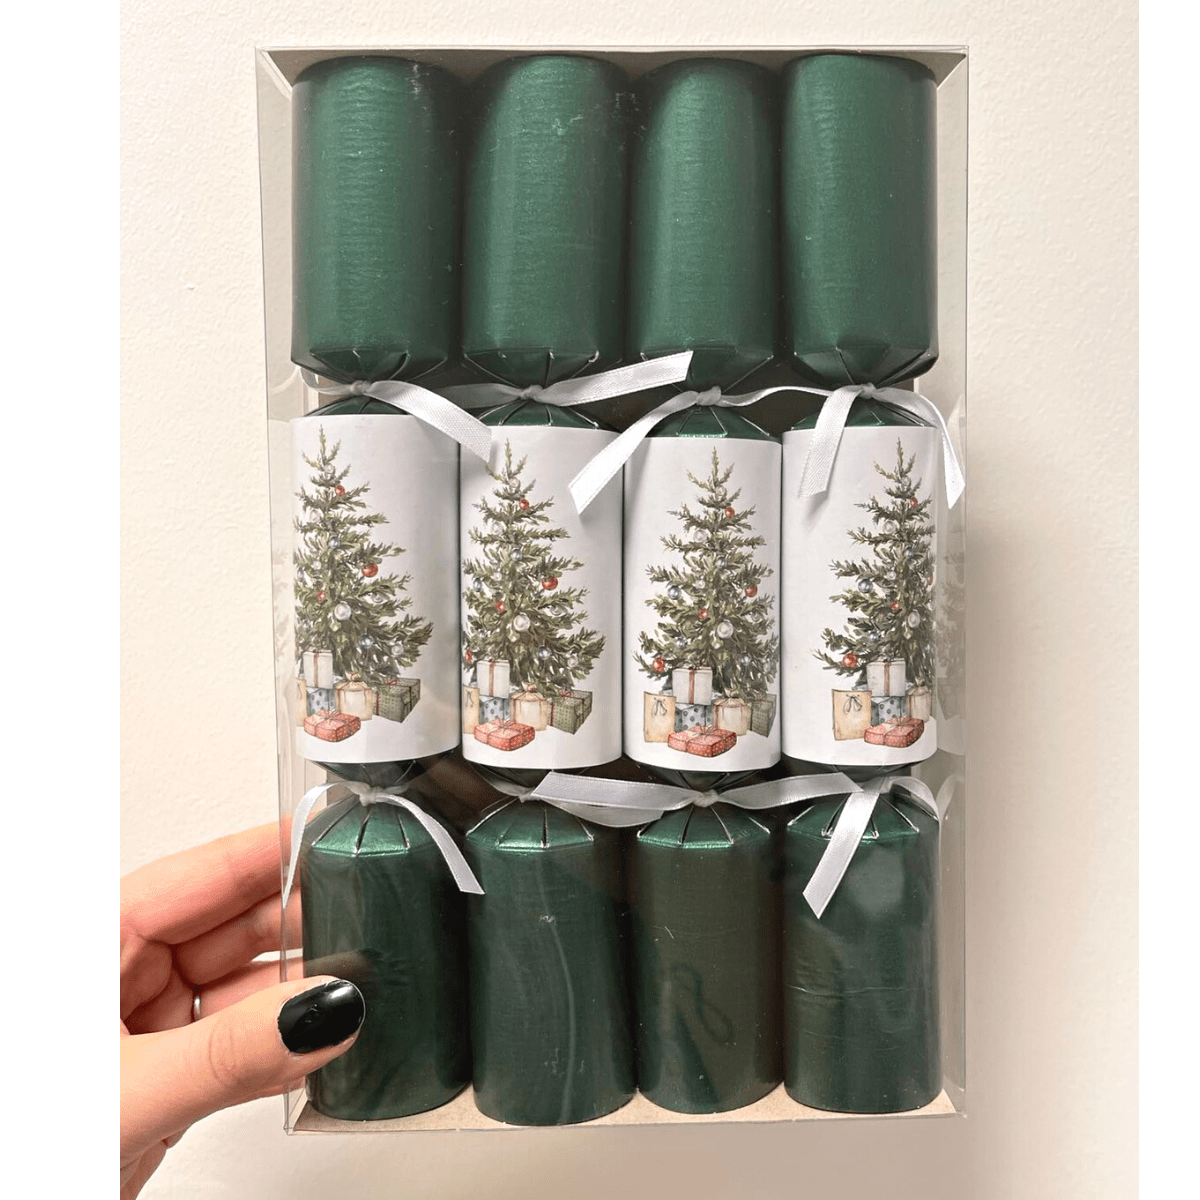 Smellbonbon Grønn, Juletre 4 stk